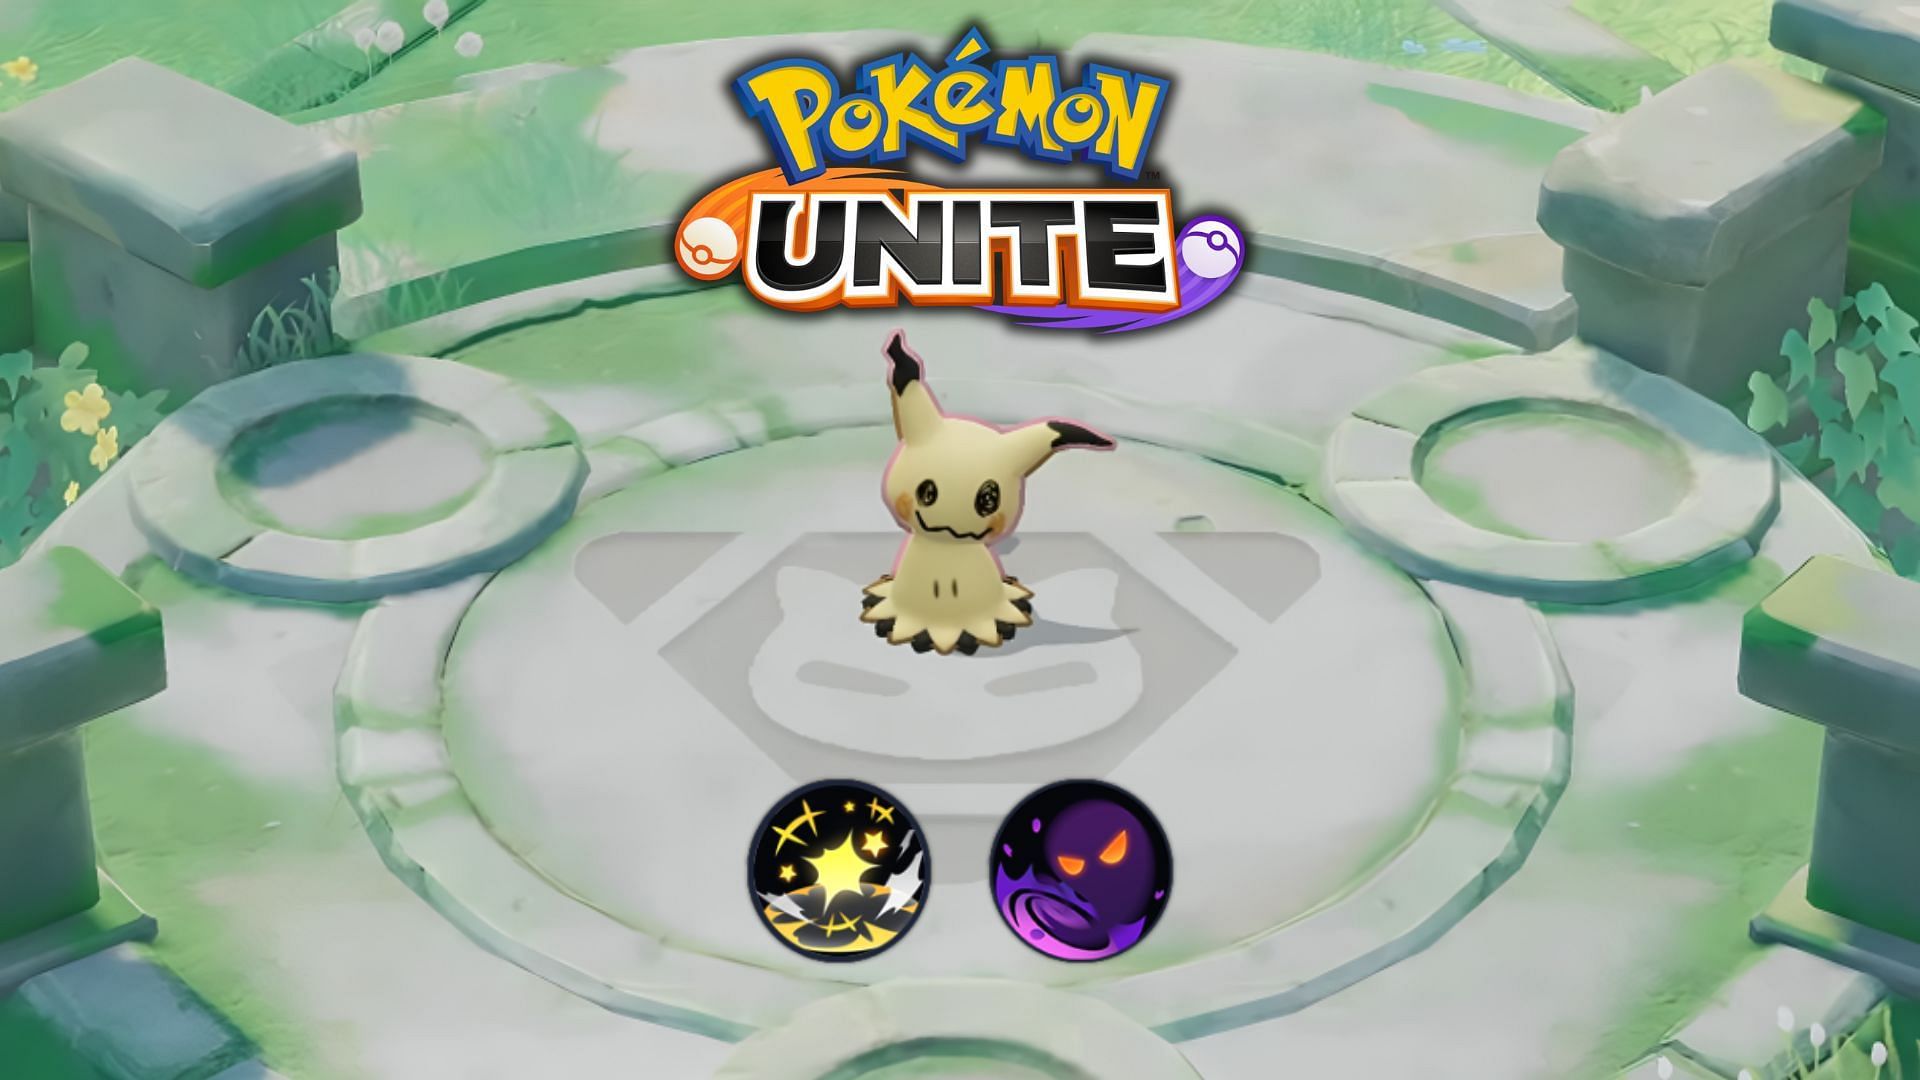 Pokemon Unite player redesigns Mimukyu abilities to give an unique edge